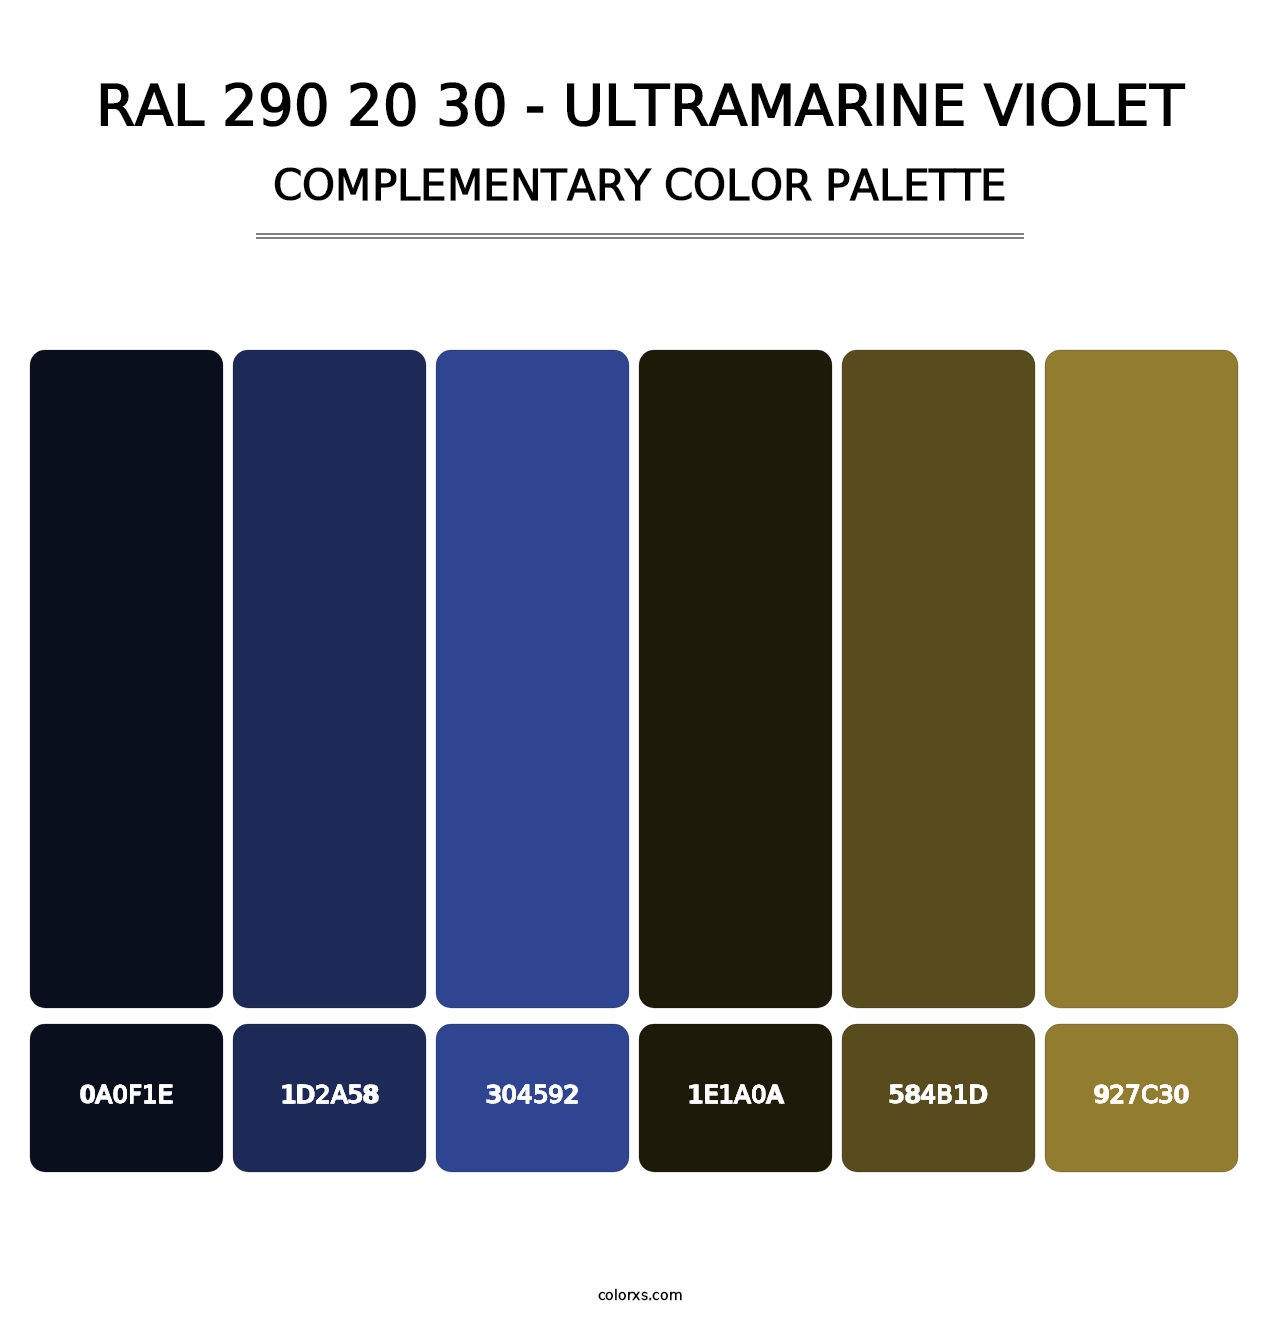 RAL 290 20 30 - Ultramarine Violet - Complementary Color Palette